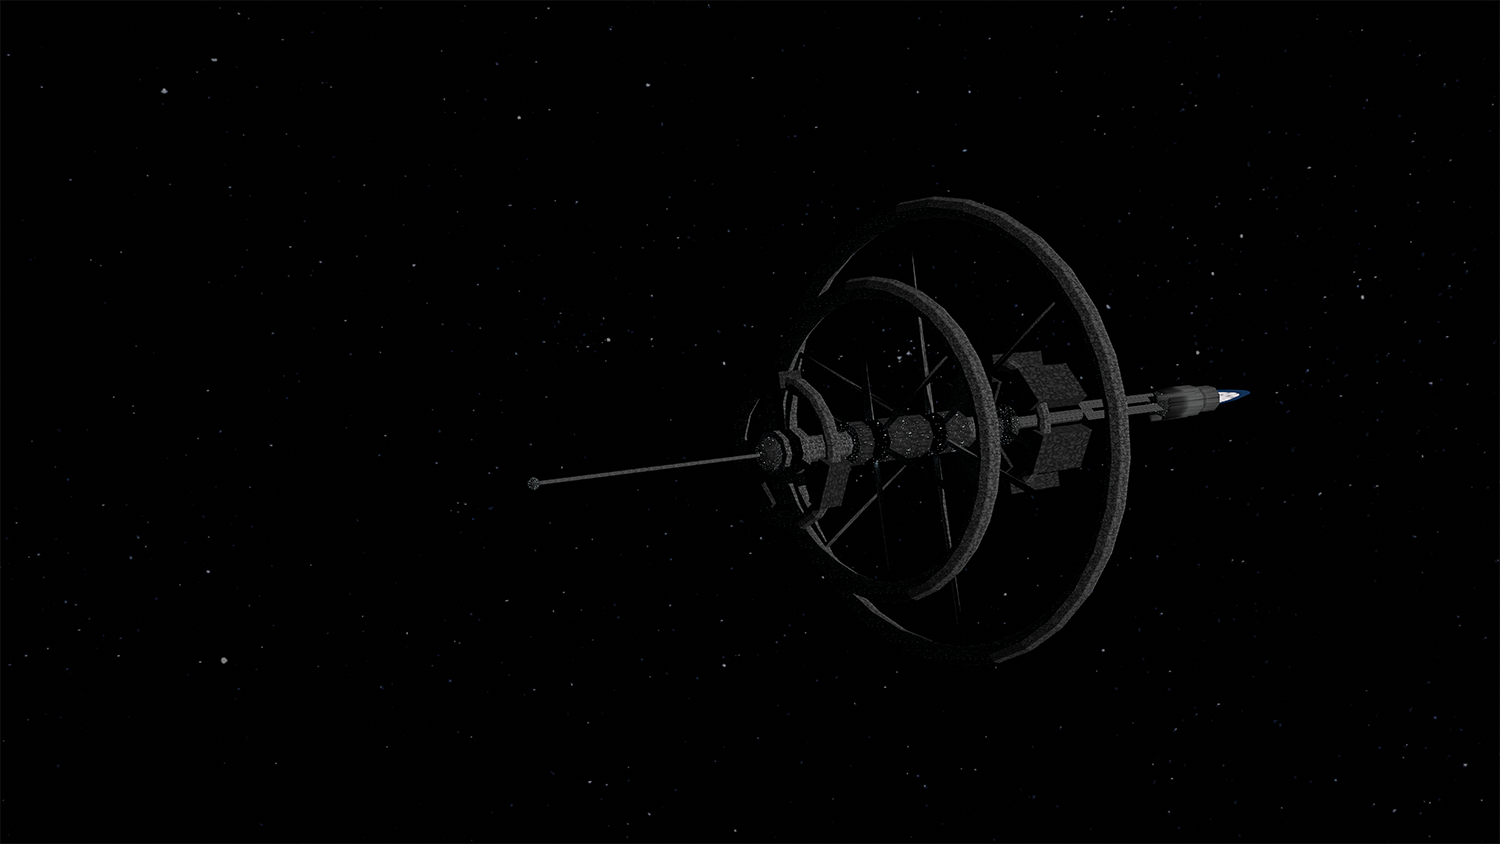 3D render of the Spaceship